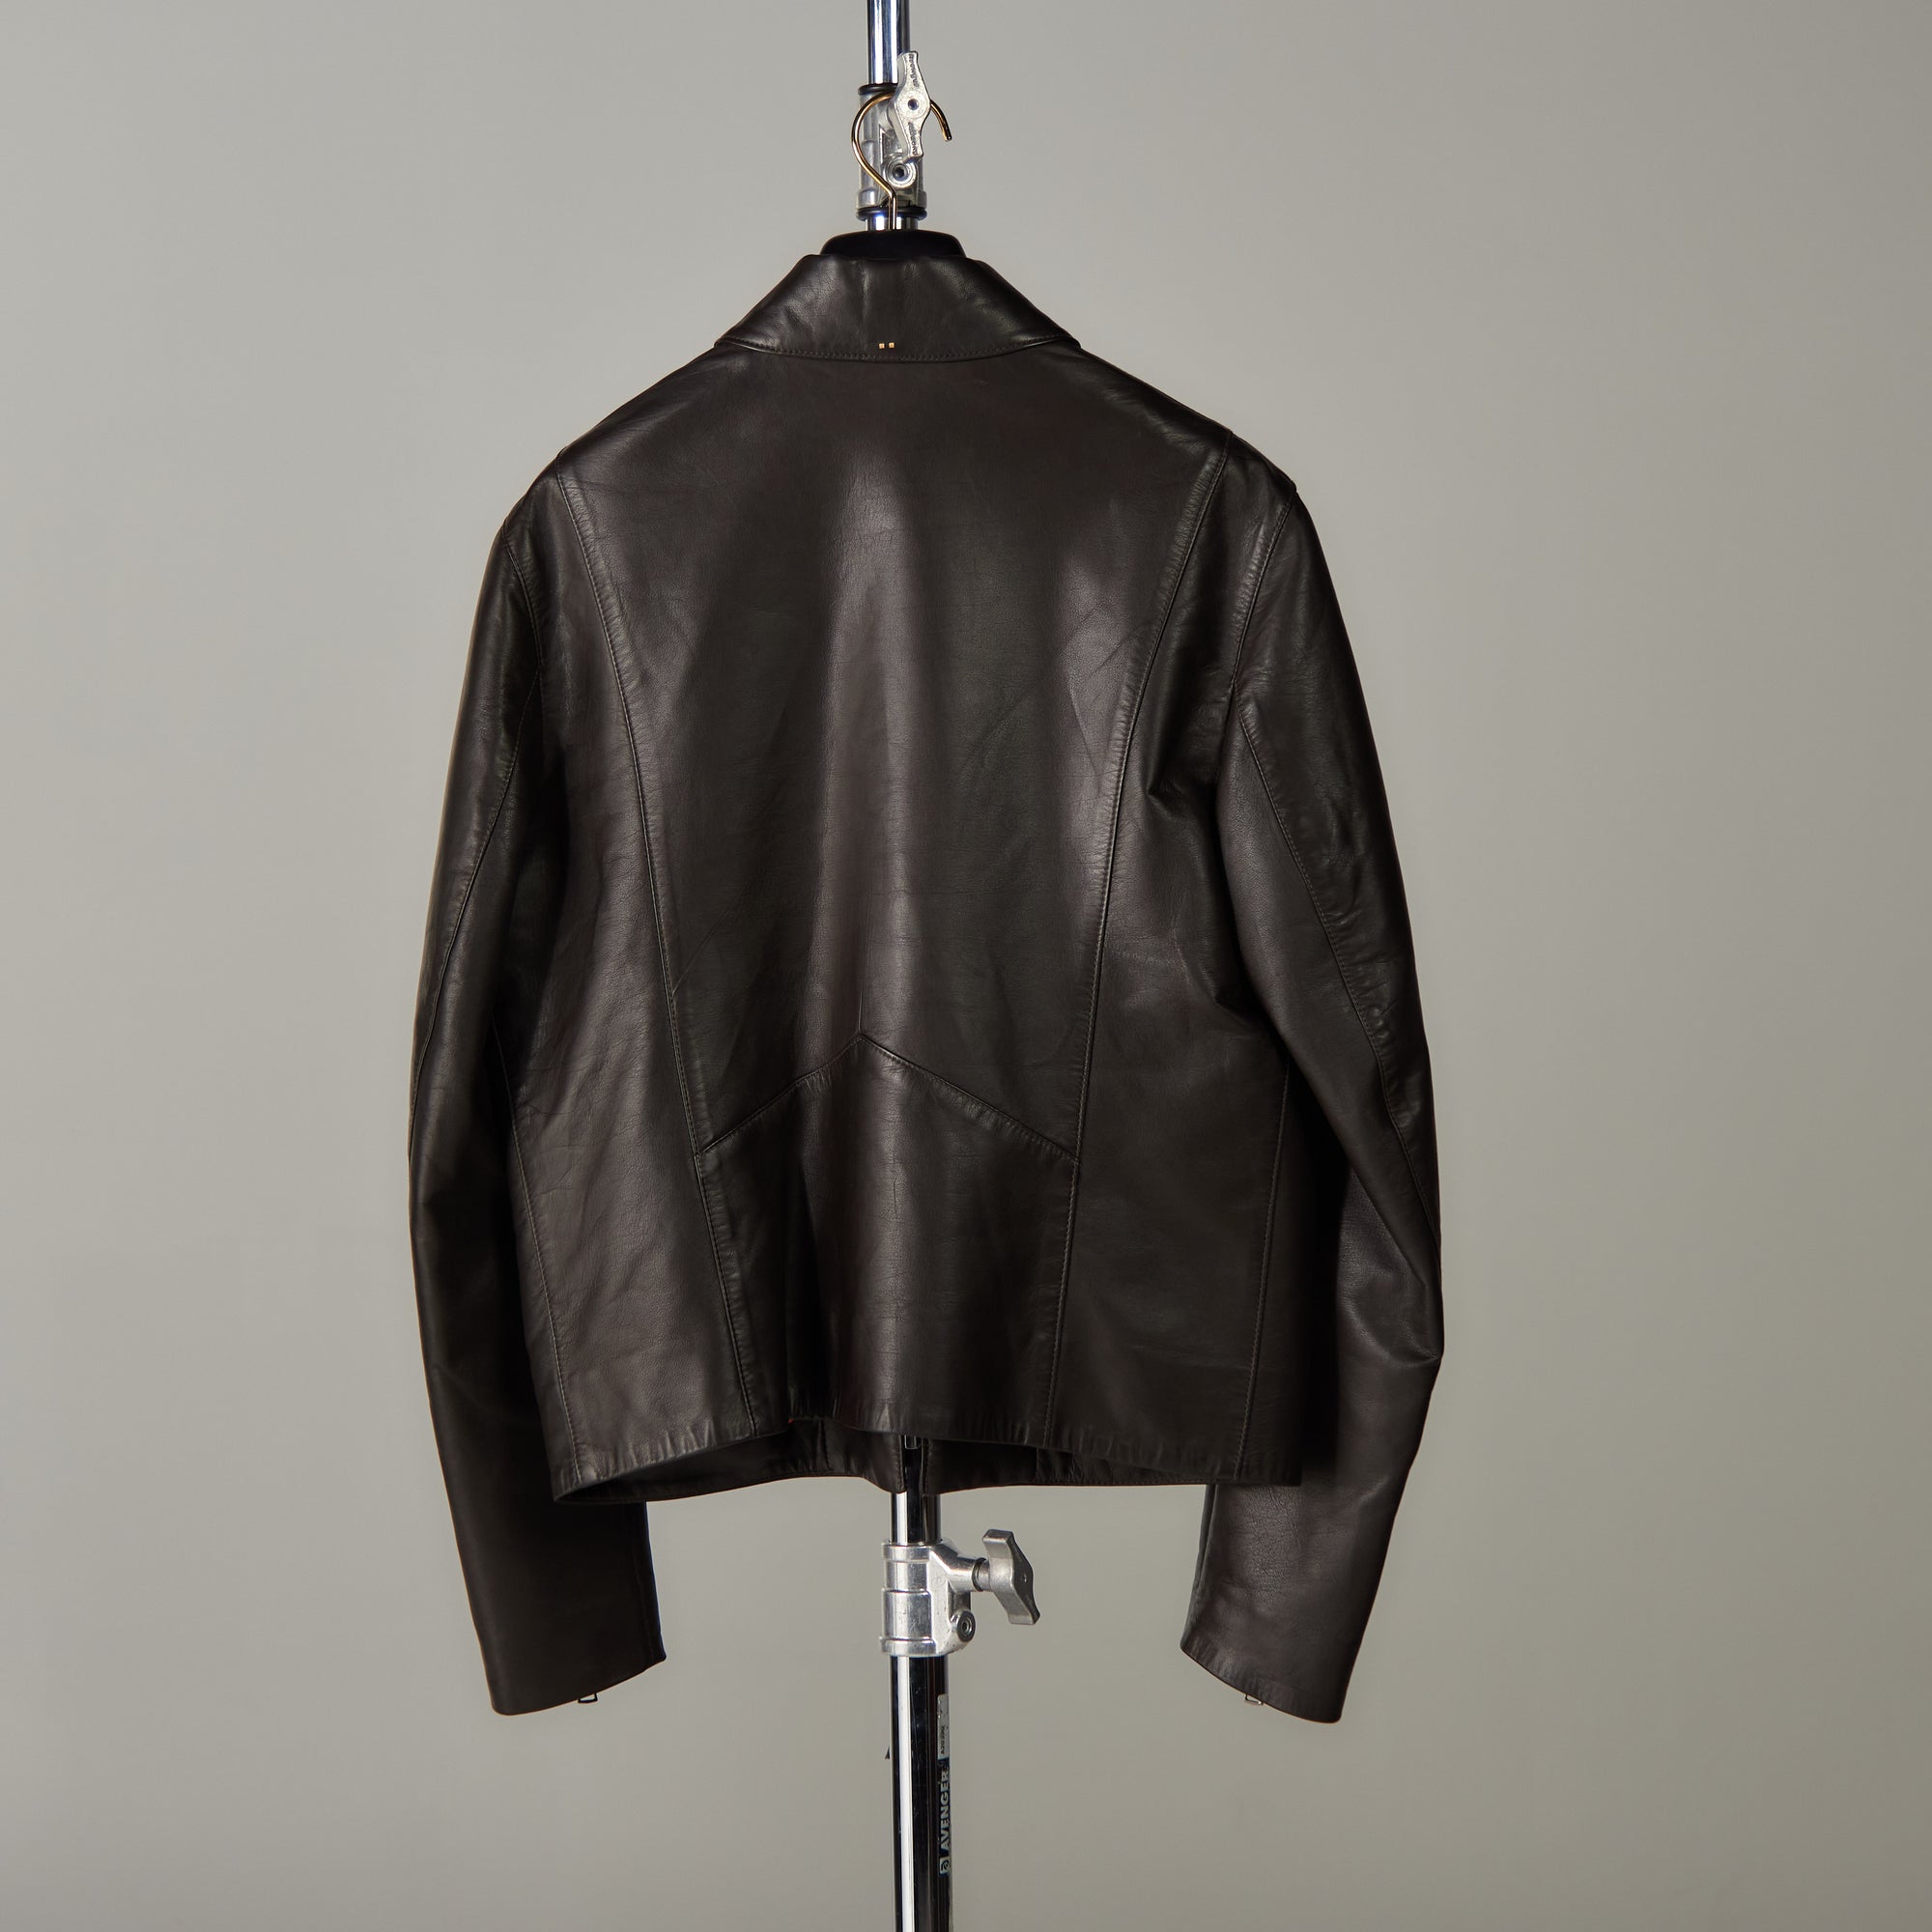 LNO Blouson - Ash Calf Leather Size 40 - SOLD